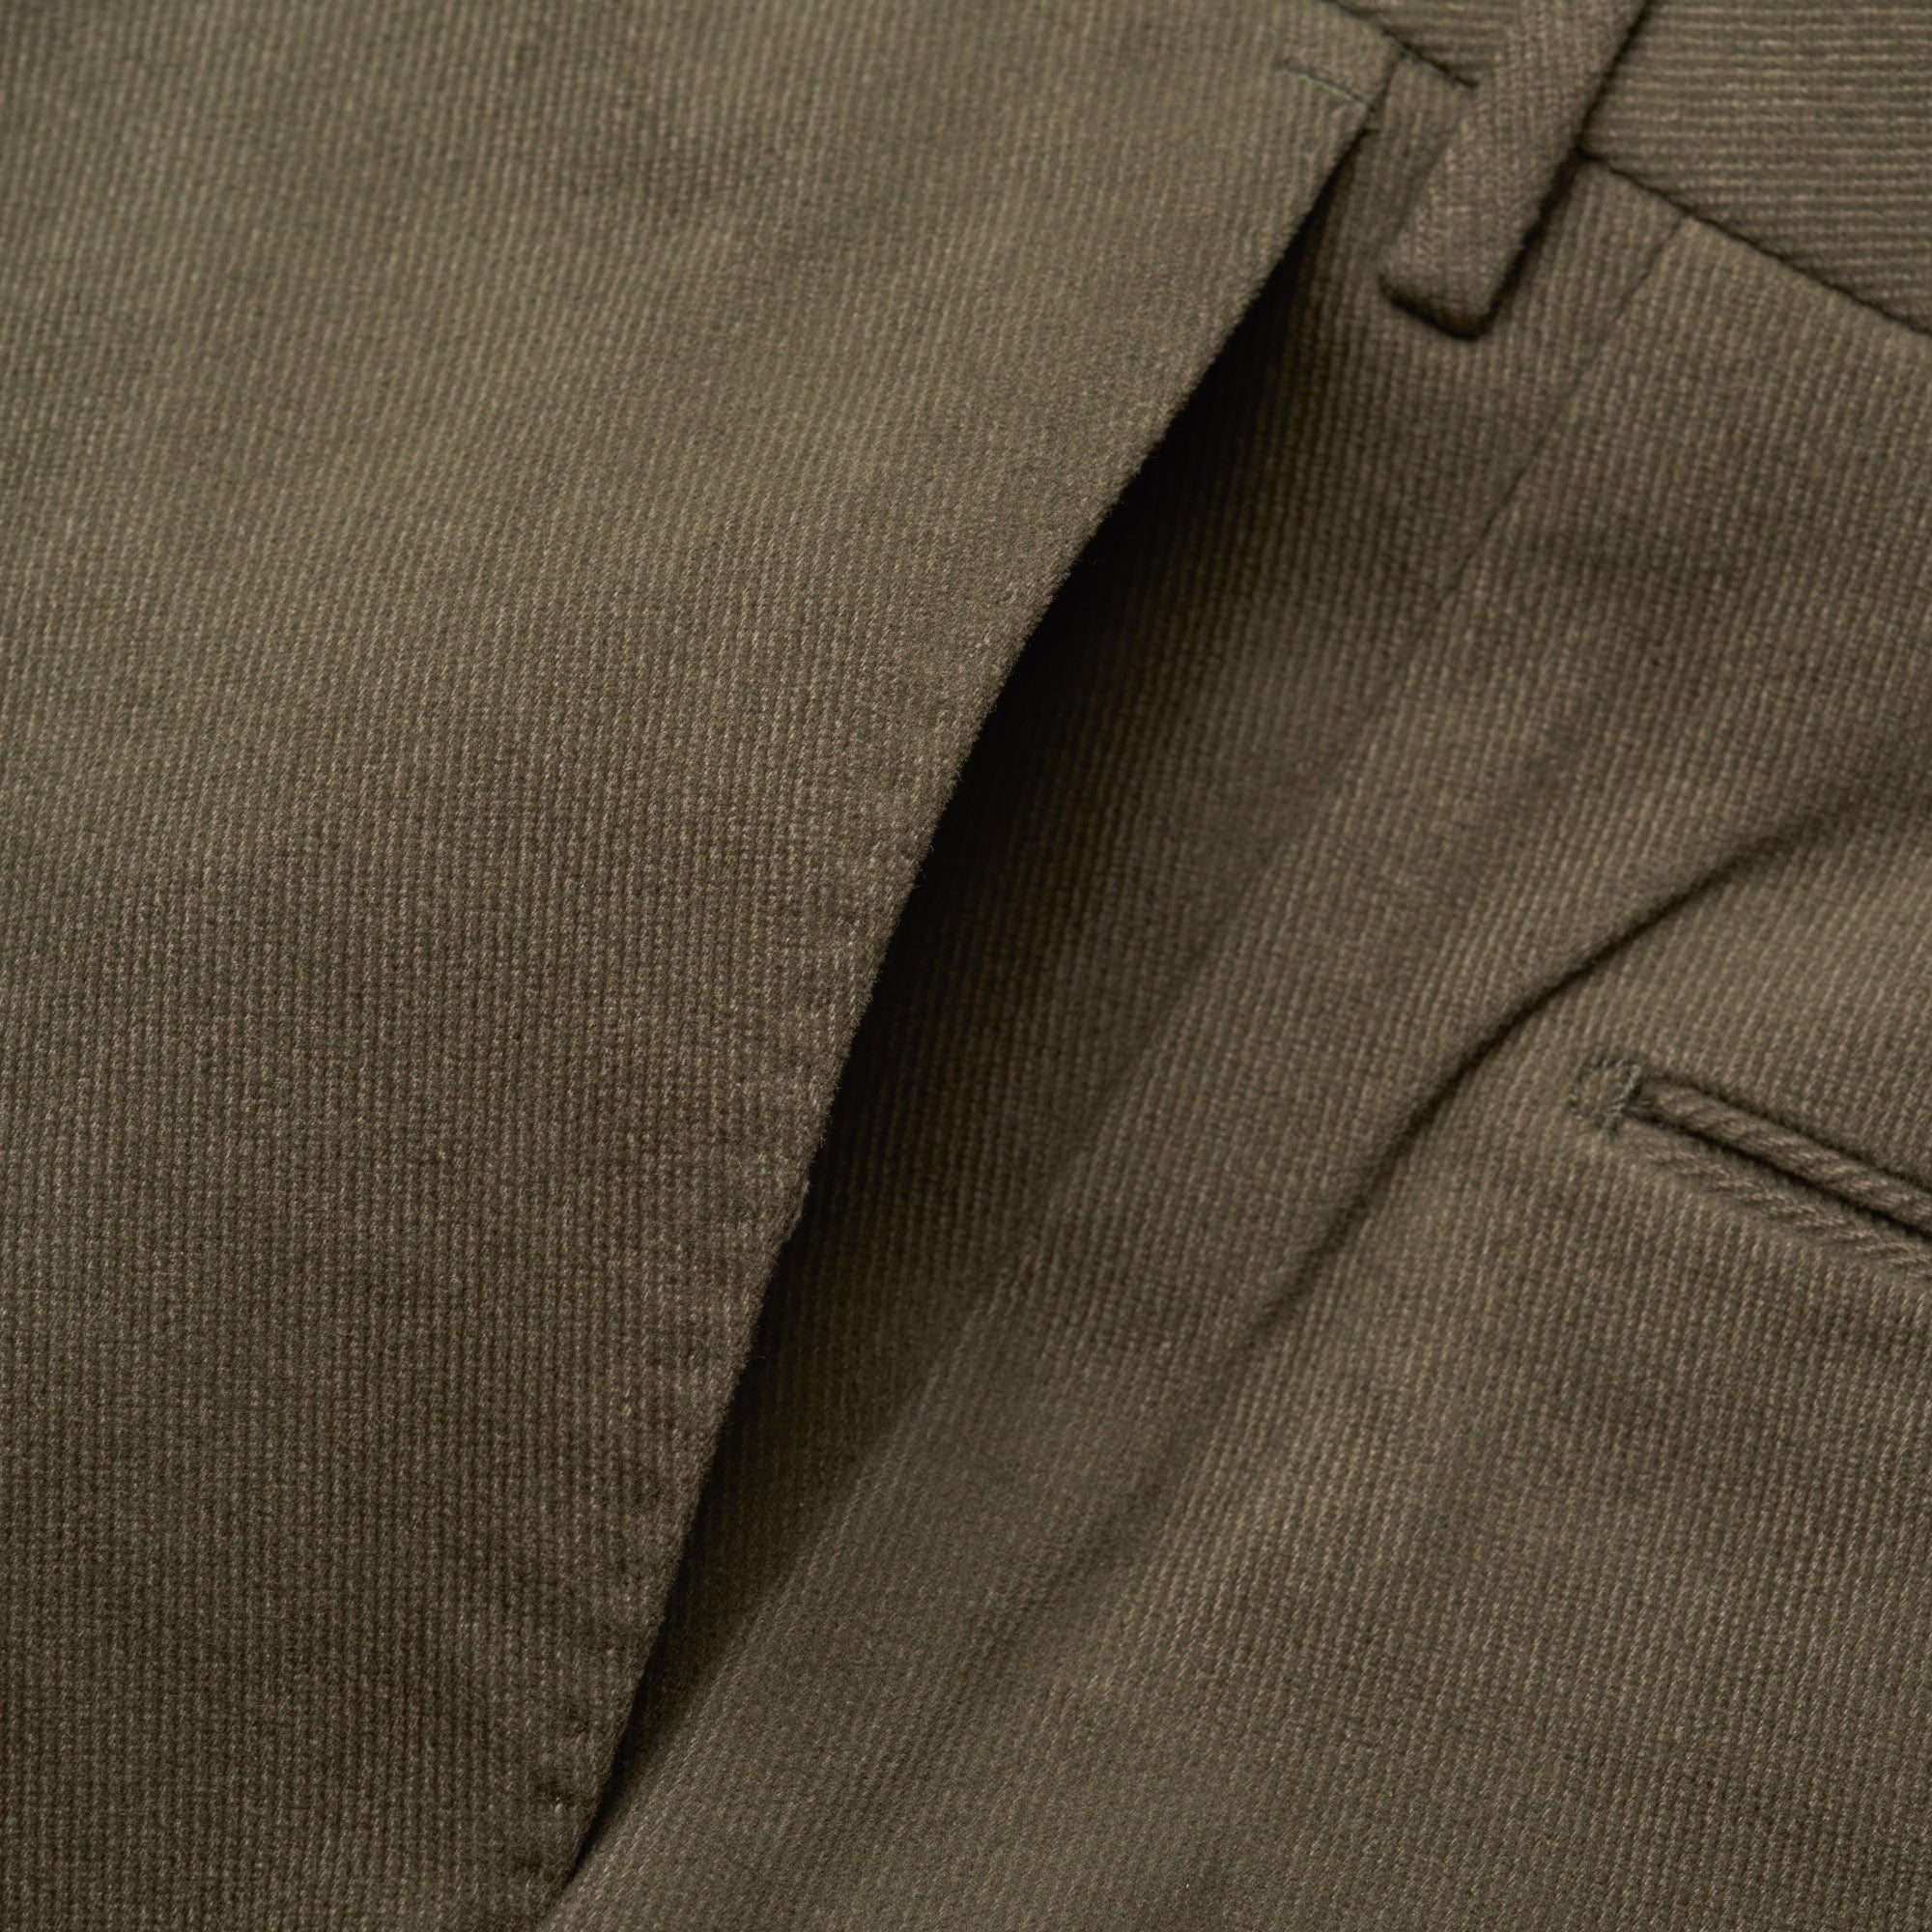 PT01 PANTALONI TORINO "Jacques" Army Green Twill Cotton Flat Front Pants NEW PT01 PANTALONI TORINO